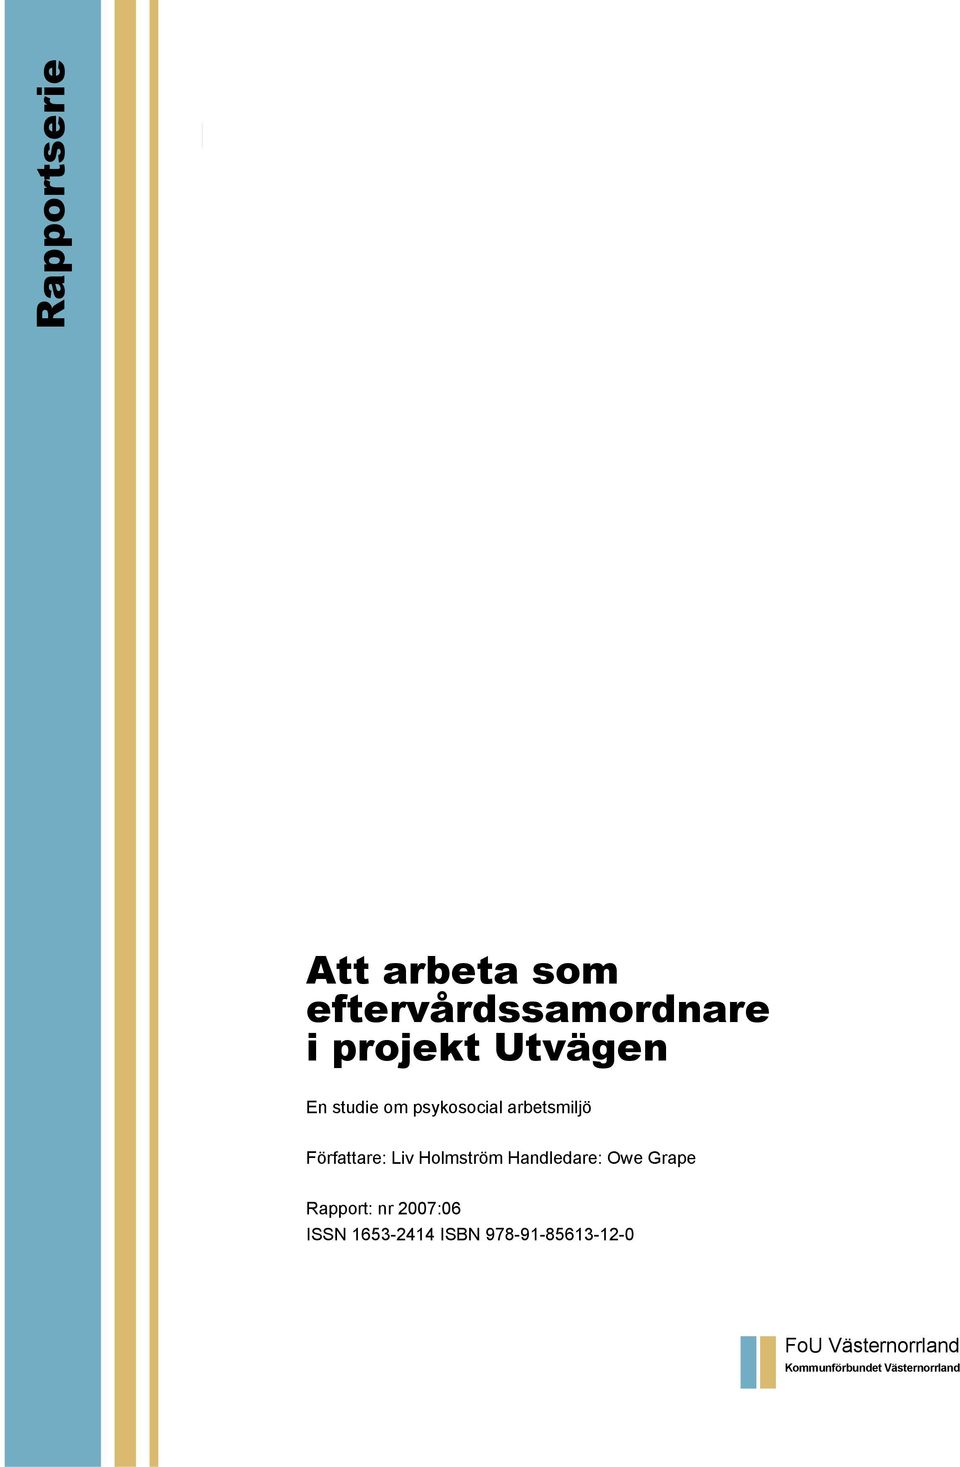 Holmström Handledare: Owe Grape Rapport: nr 2007:06 ISSN